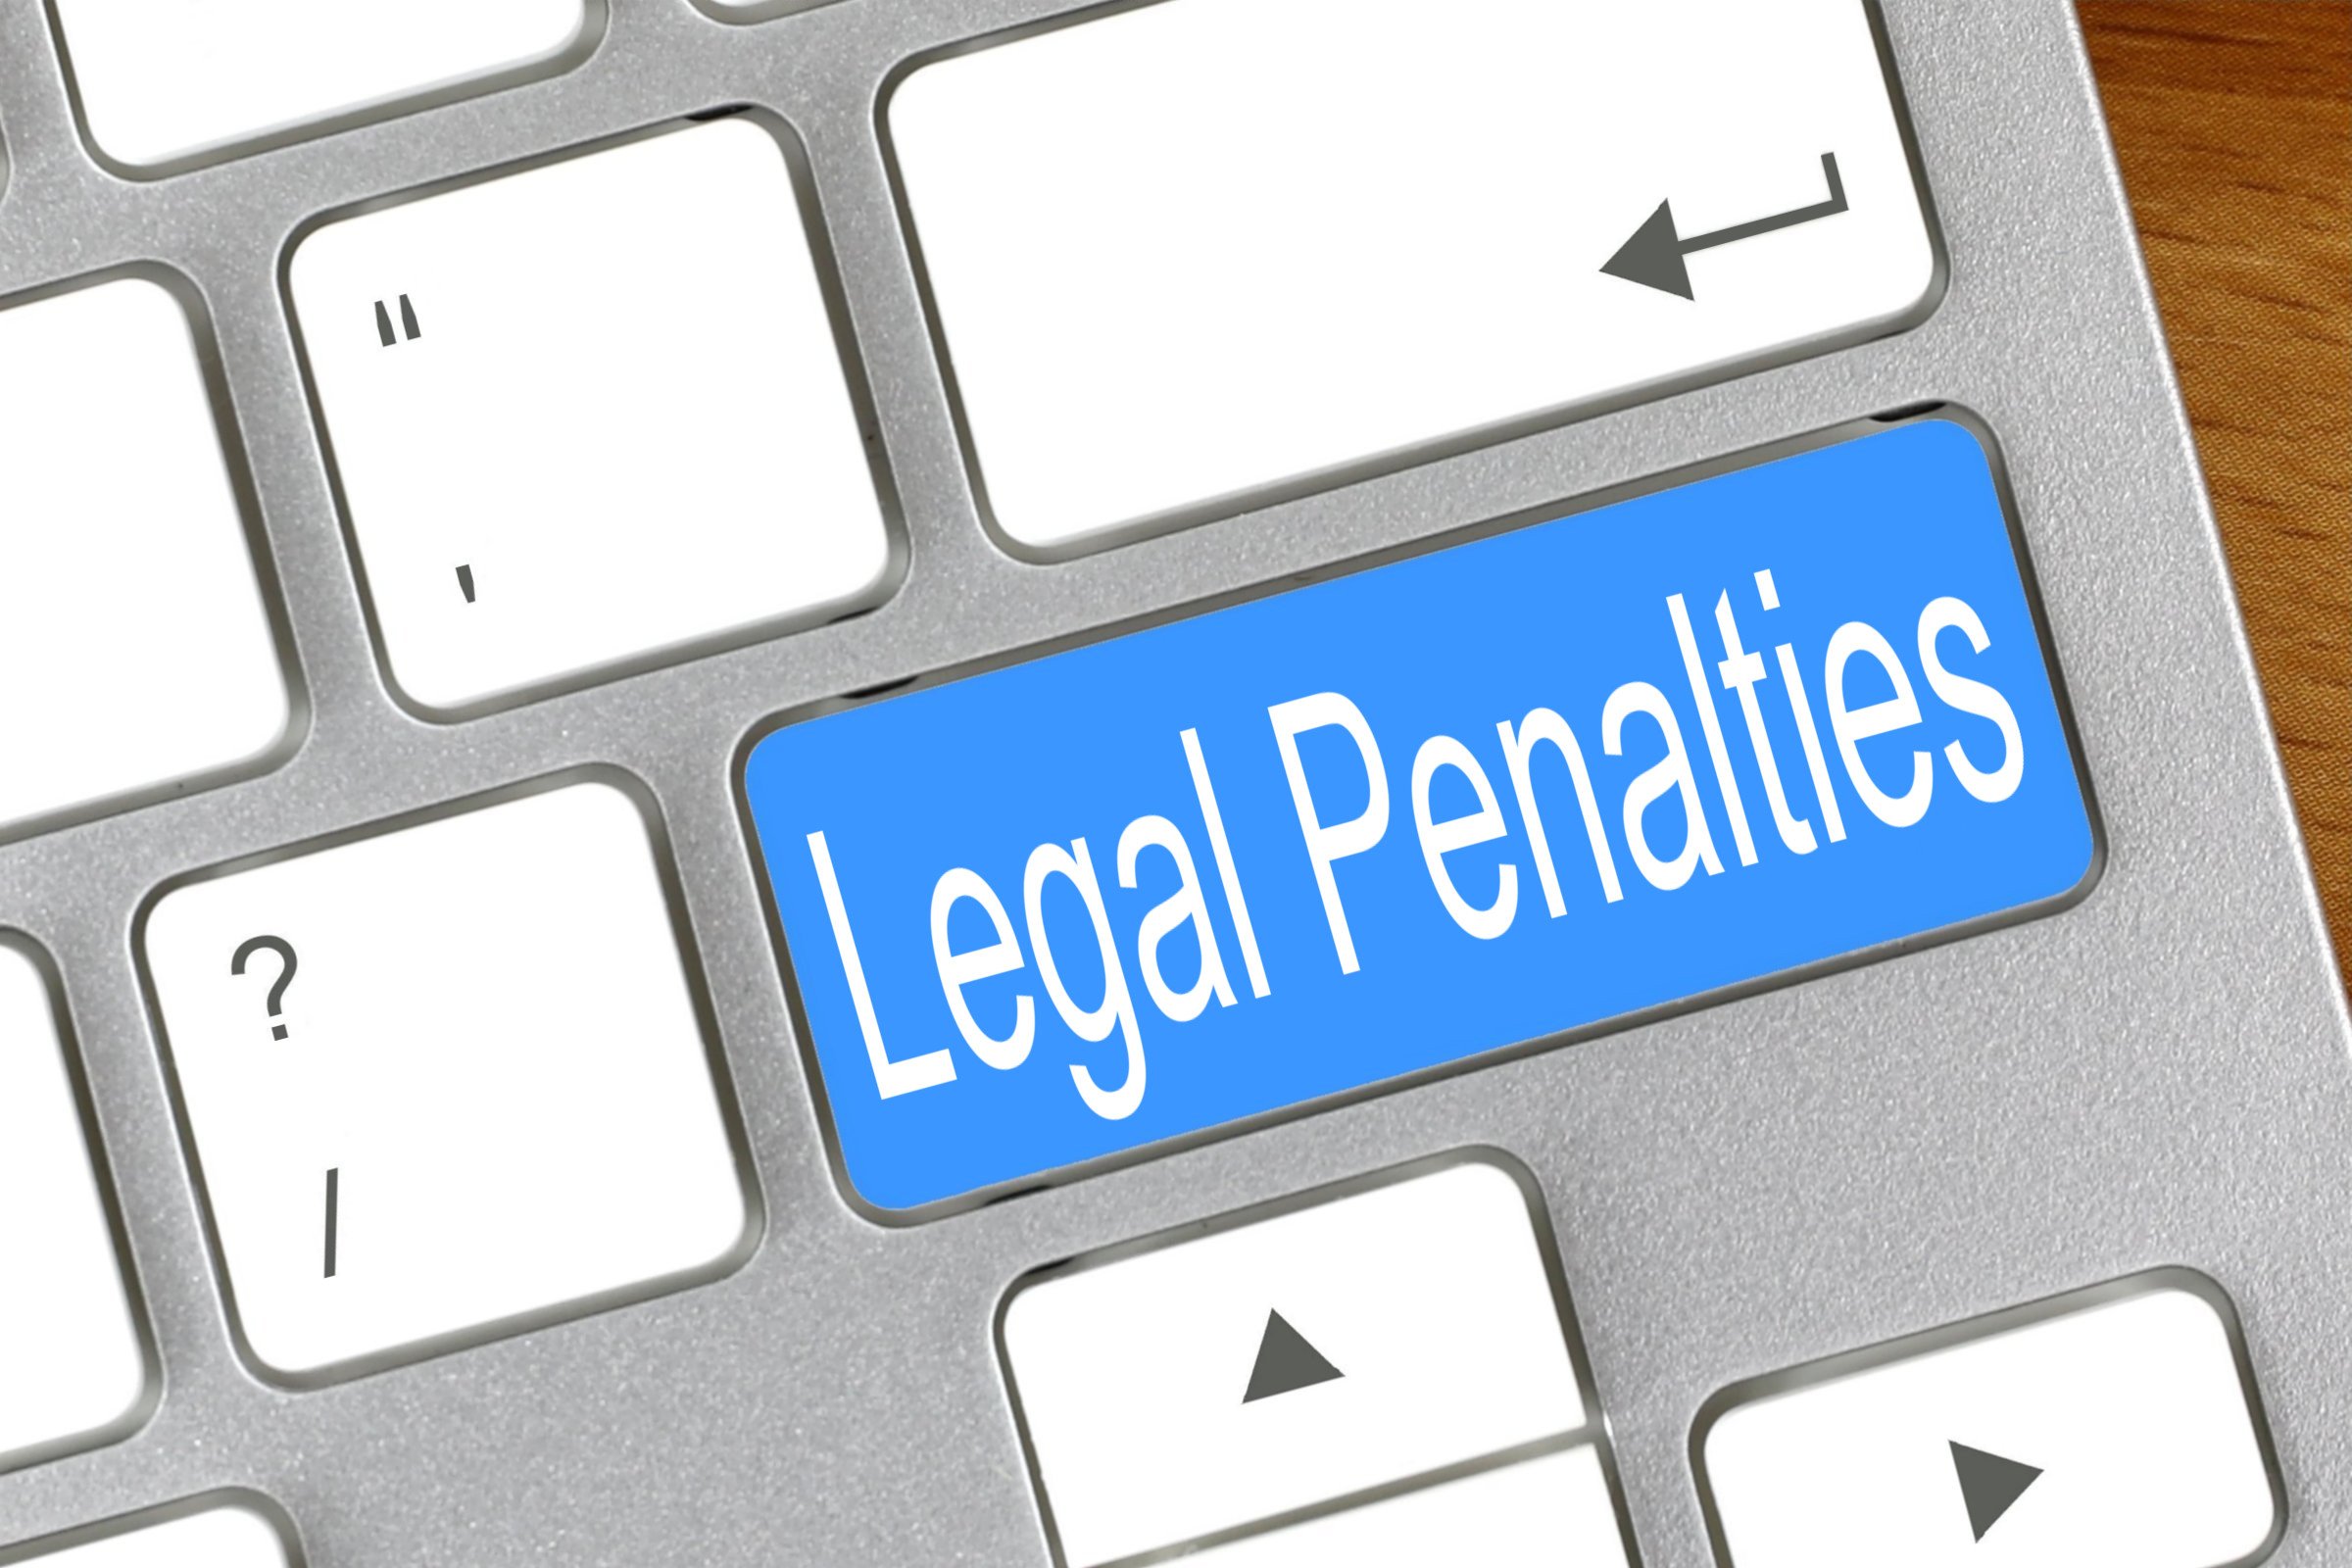 legal penalties